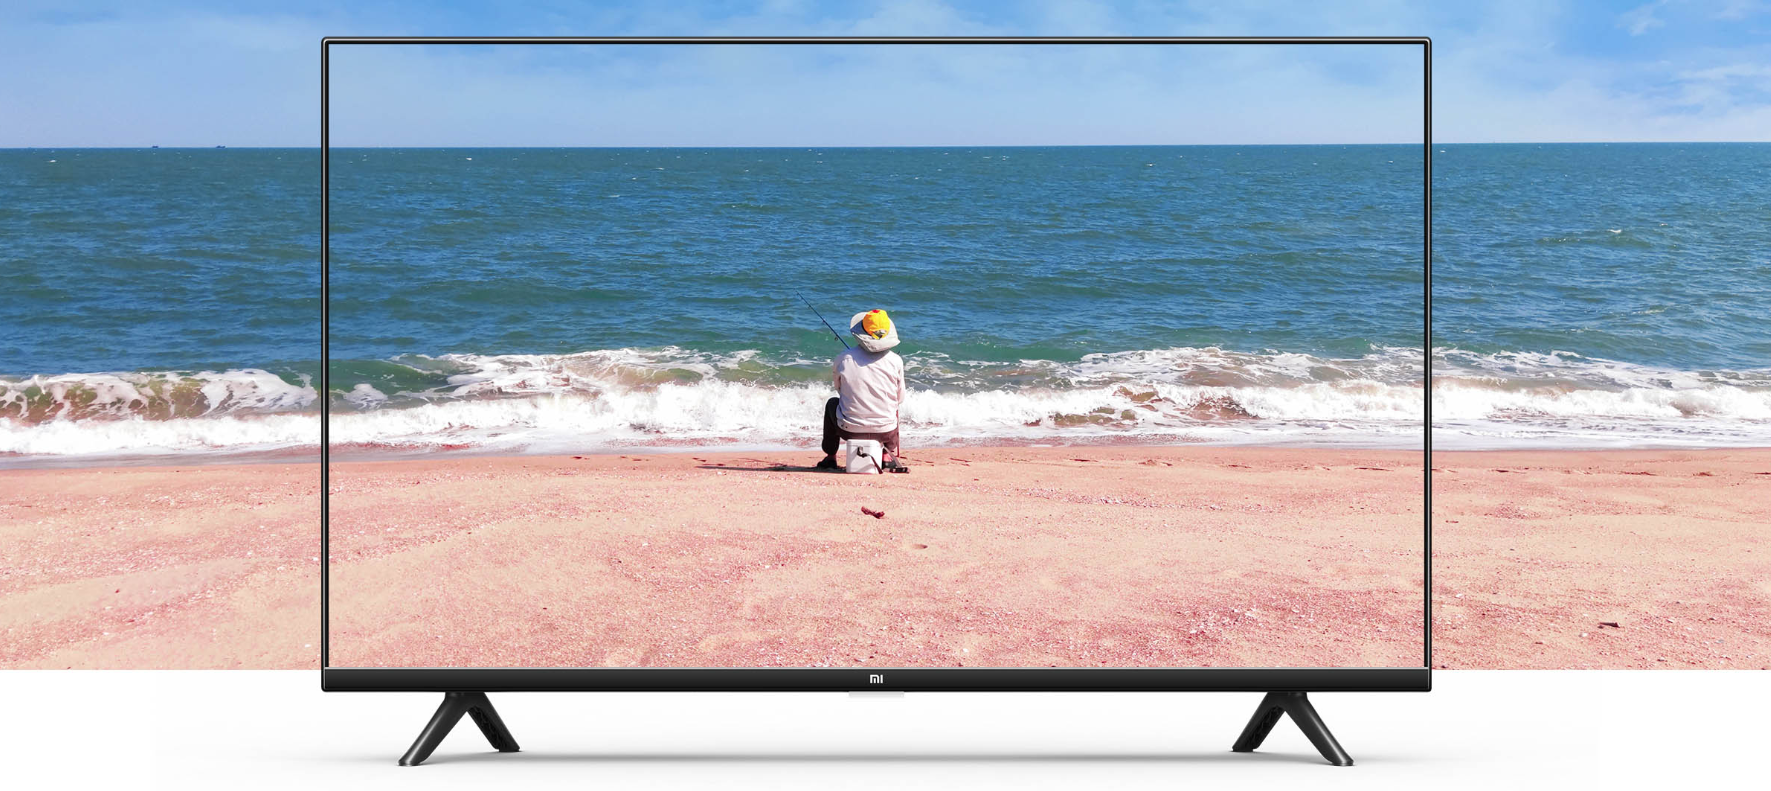 Телевизор Xiaomi Mi LED TV P1 32″ (L32M6-6ARG)